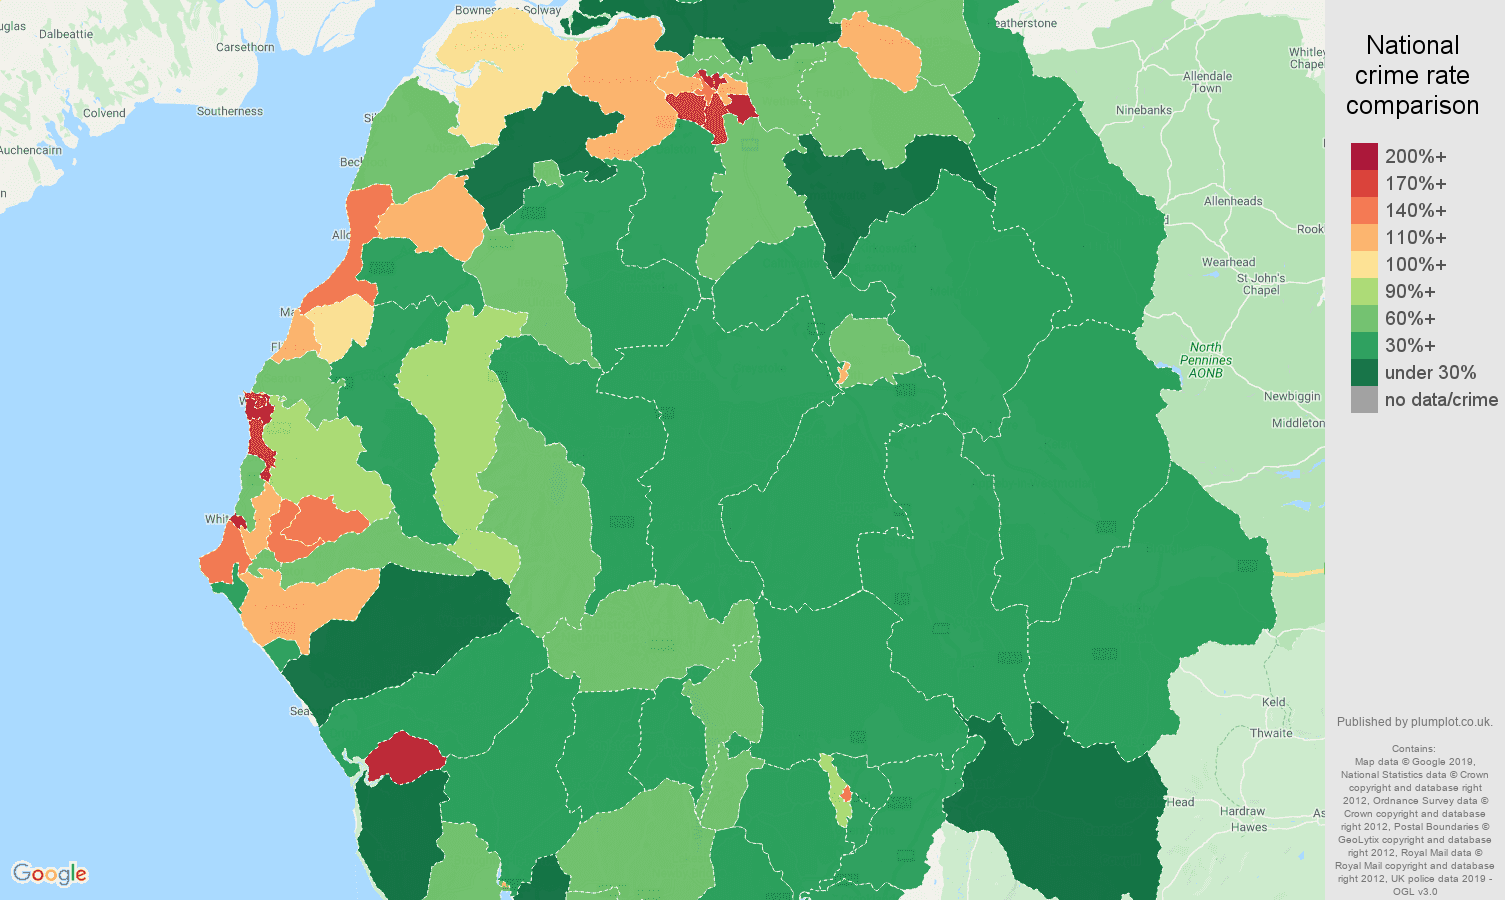 Cumbria public order crime rate comparison map